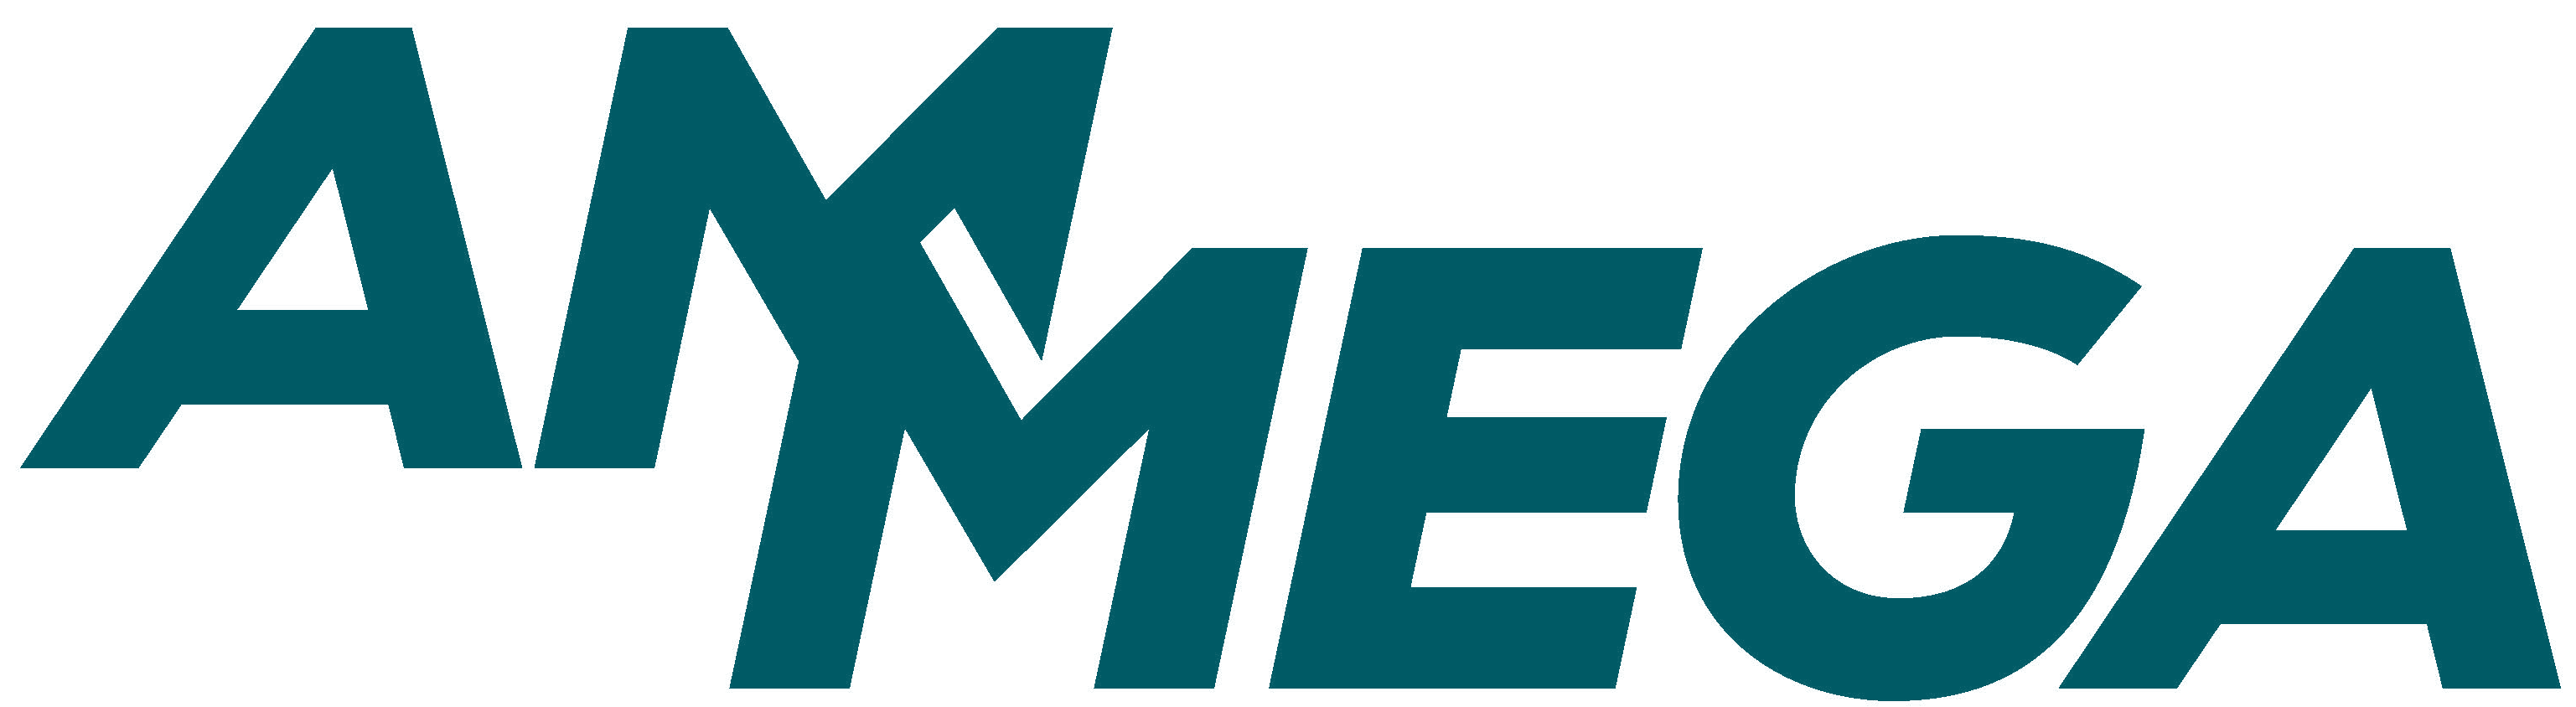 Ammega - Logotipo oficial